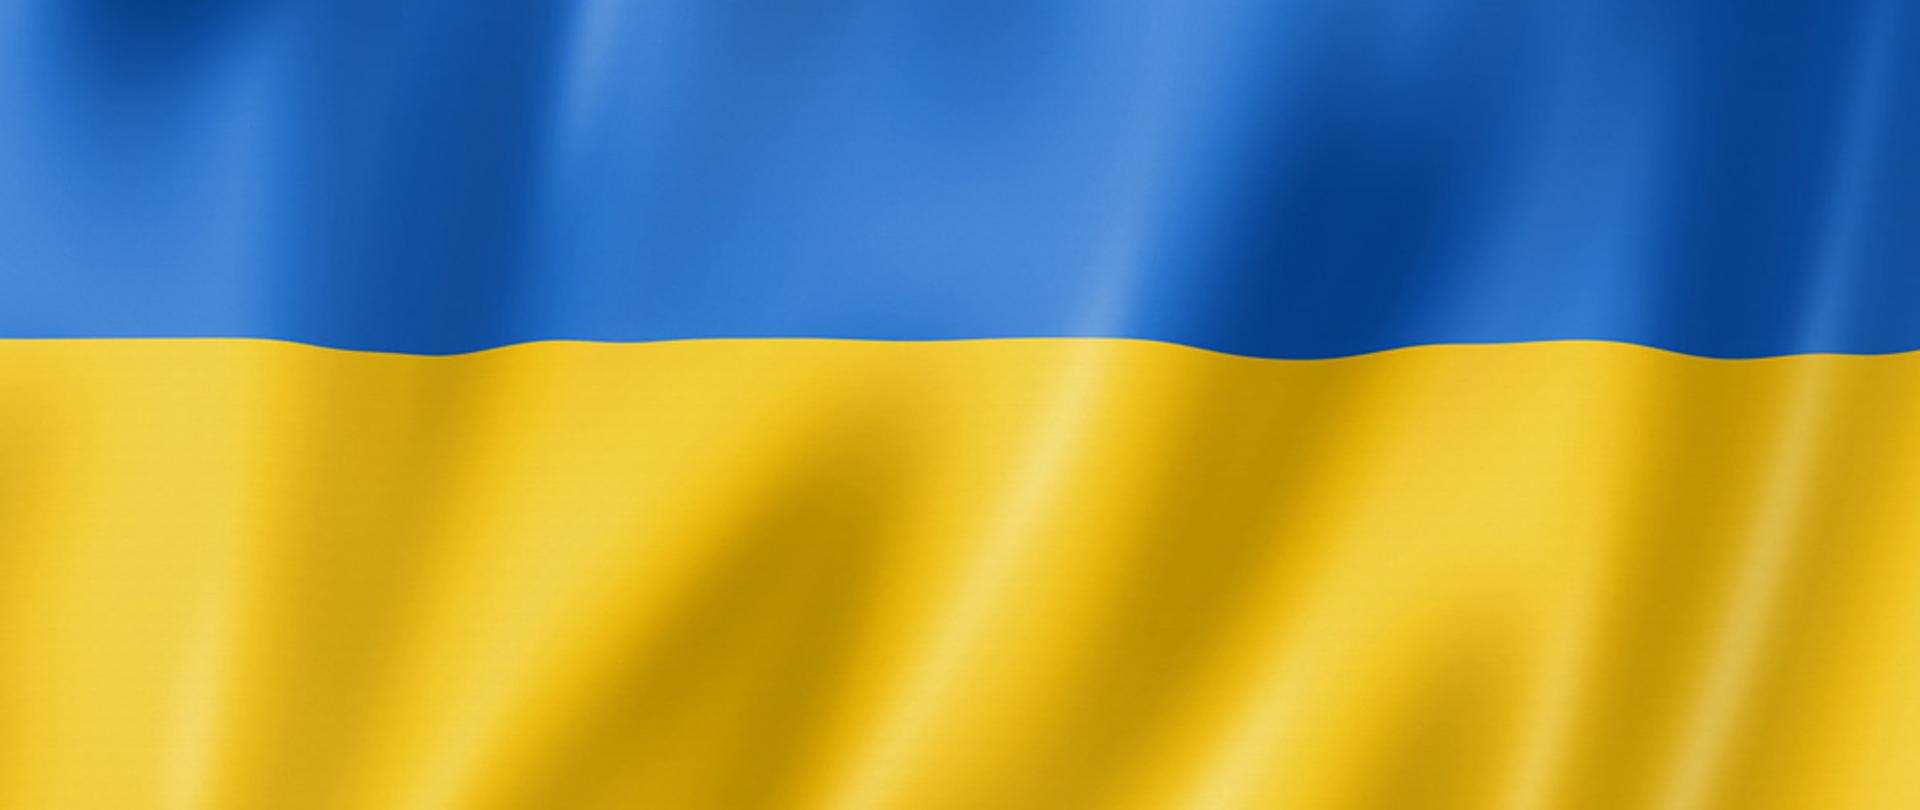 !ATTENTION! #StandWithUkraine/#PomagamUkrainie – coordination of humanitarian aid UPDATE